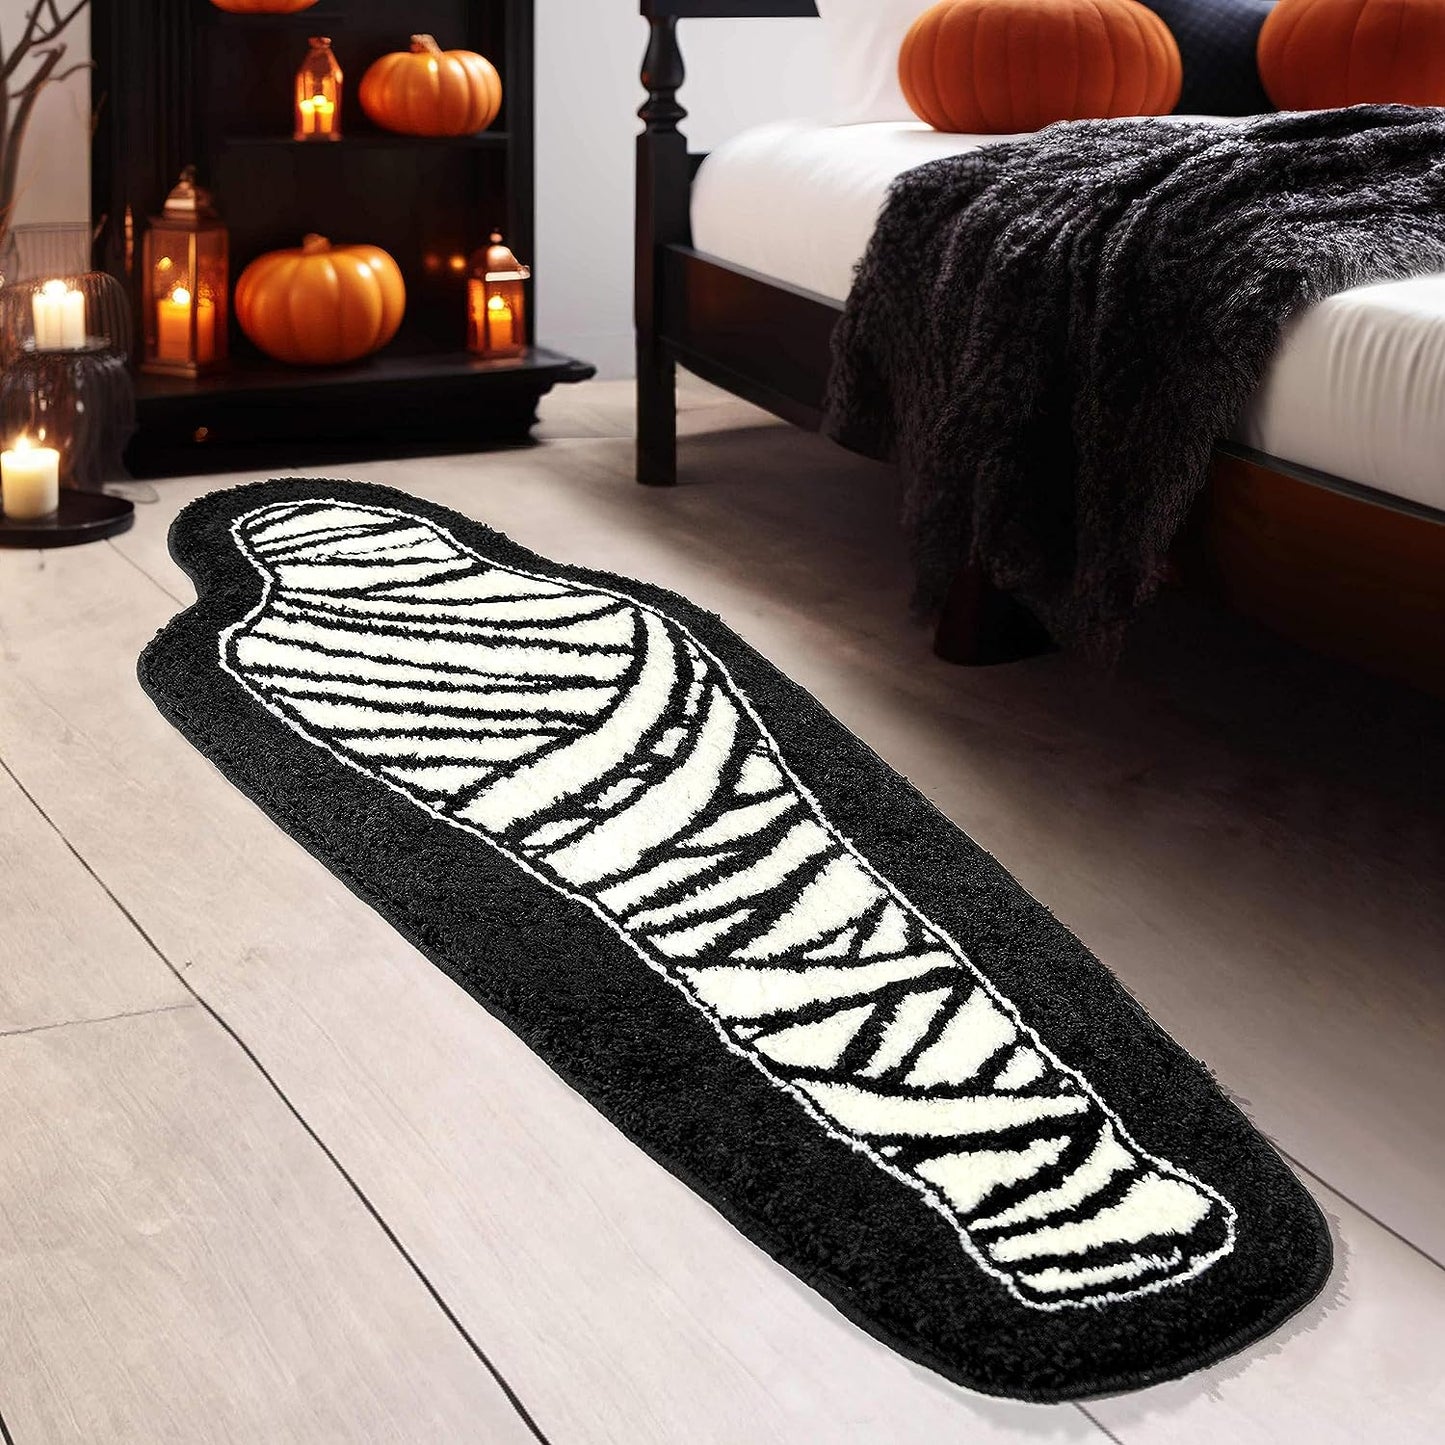 Feblilac Halloween Bathroom Rug, Black and White Mummy Bathroom Mat, 18x47 inch